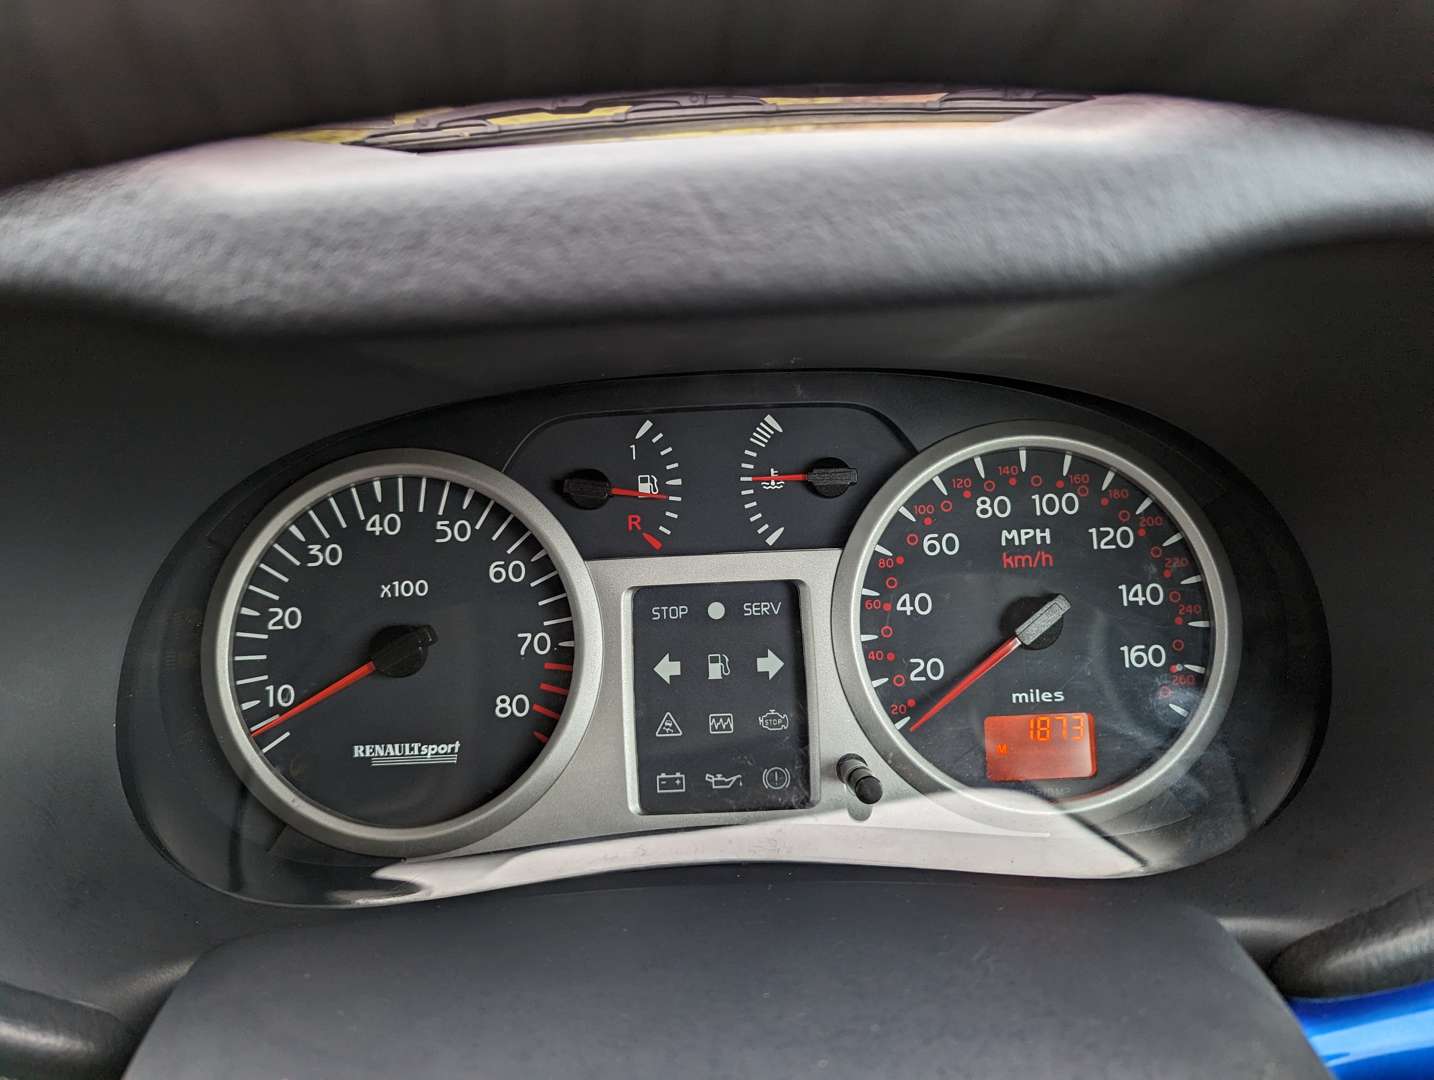 <p>2005 RENAULT CLIO SPORT V6 255 ONE OWNER 1,873 MILES</p>